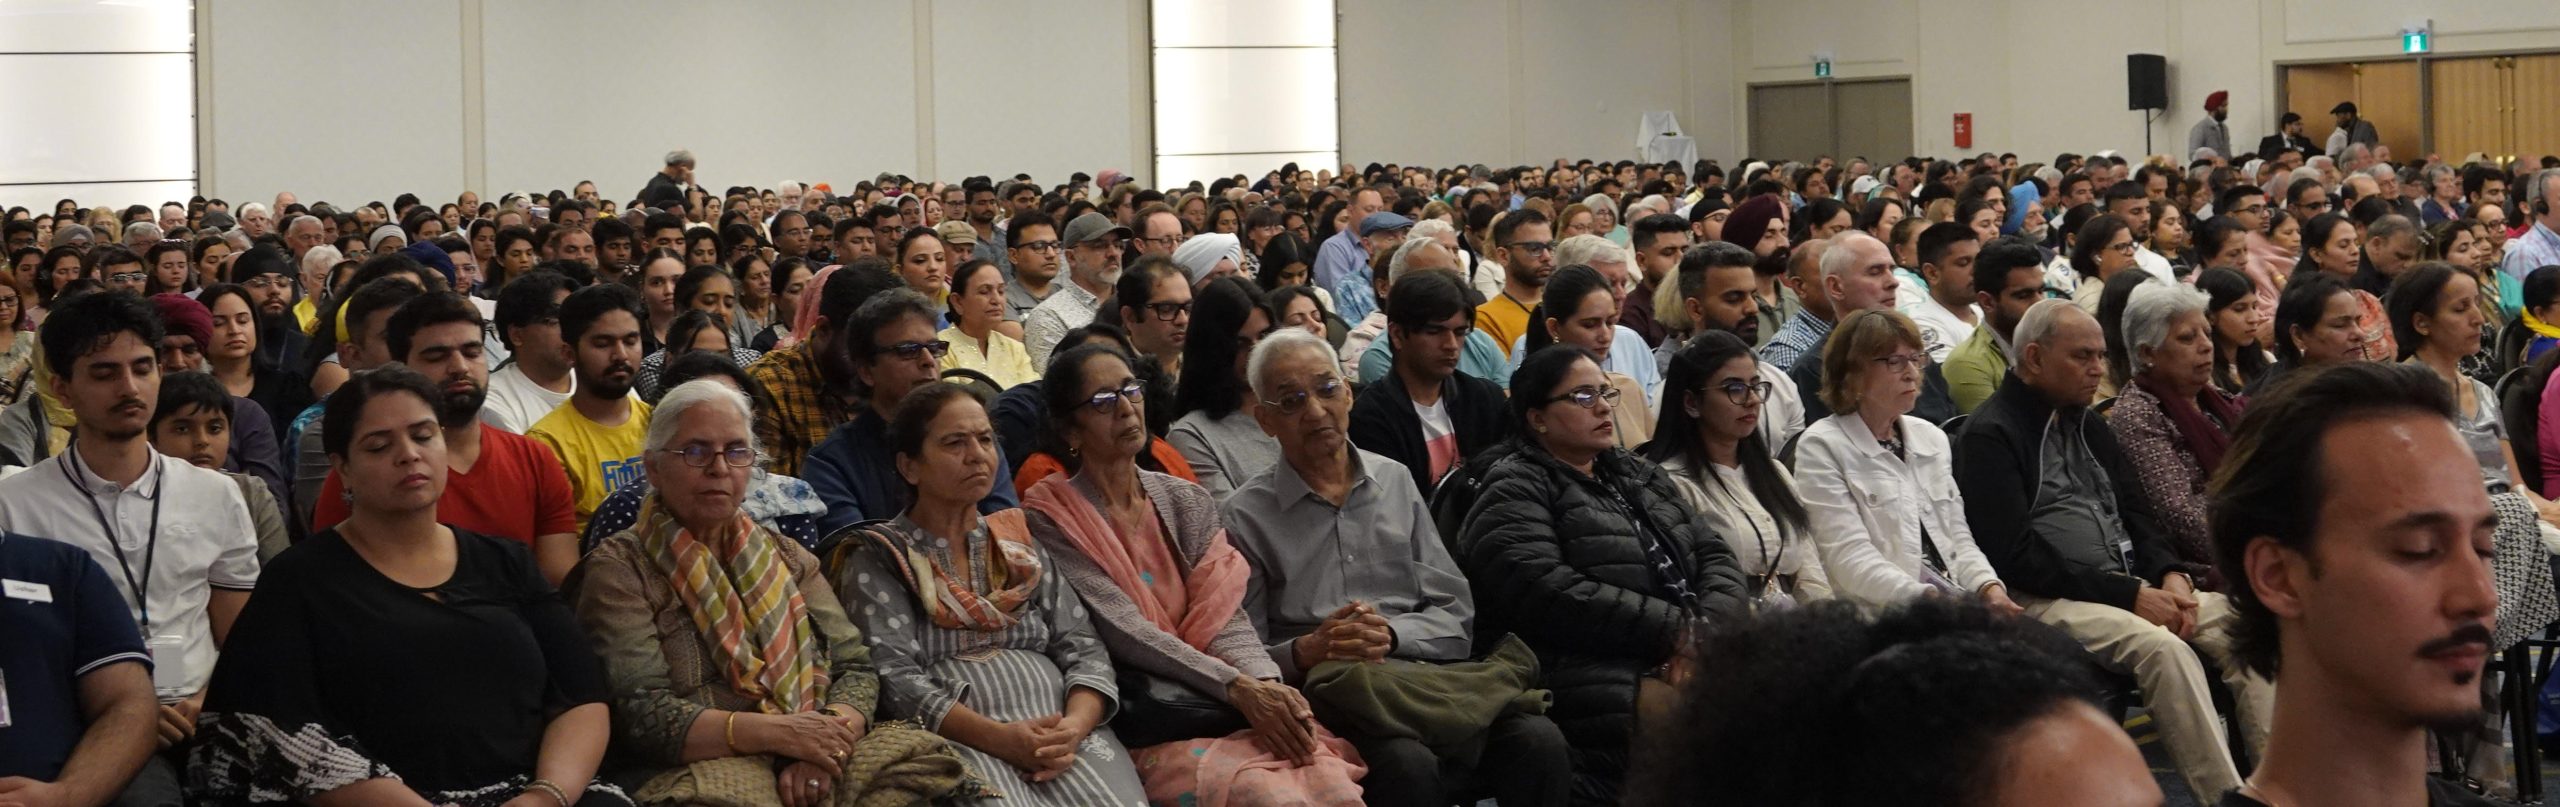 Sant Rajinder Singh Ji Maharaj’s Special Meditation Event Attracts Thousands in Toronto 2